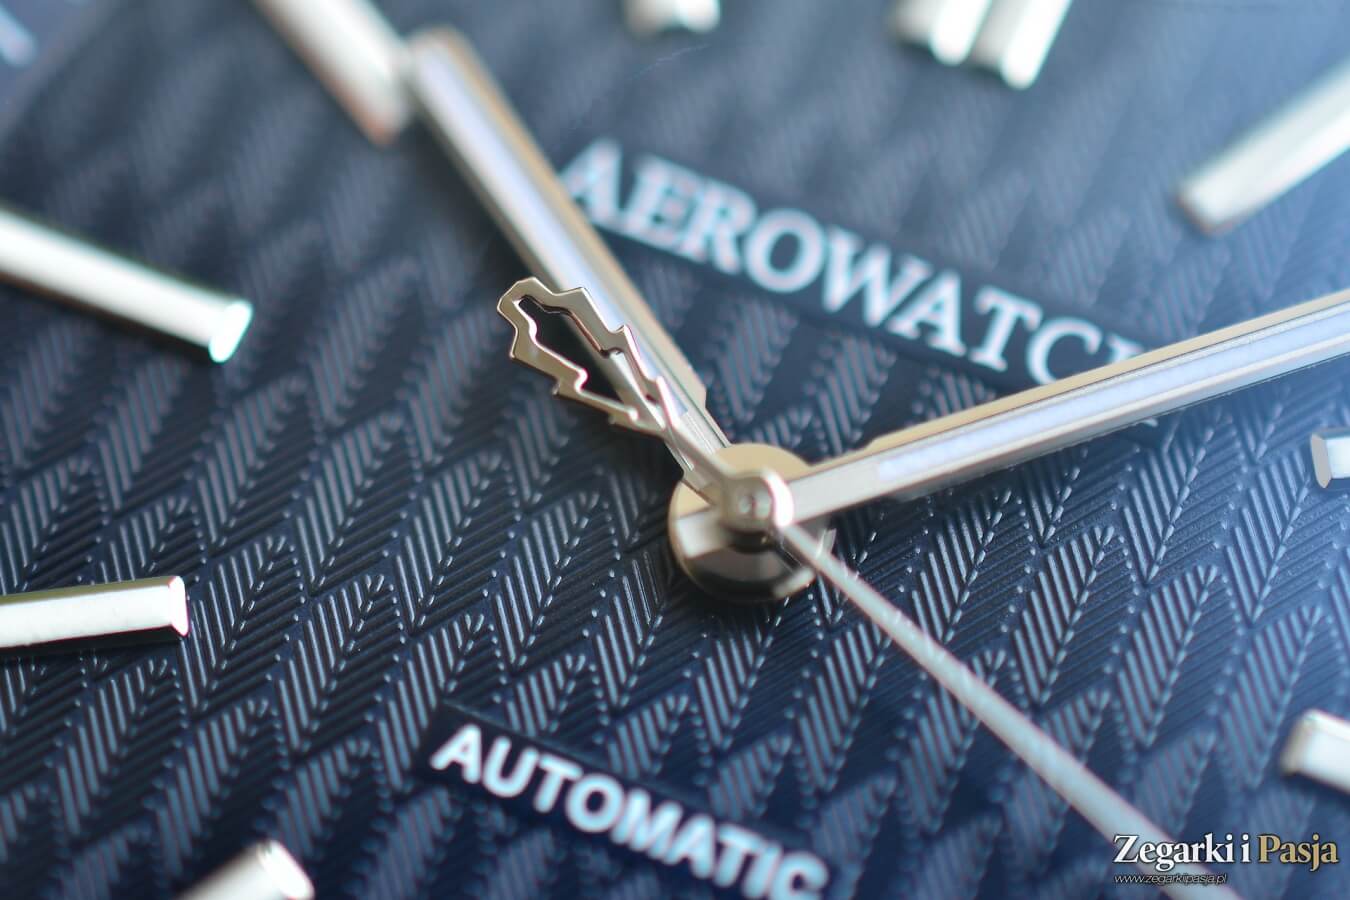 Recenzja: Aerowatch Milan Automatic